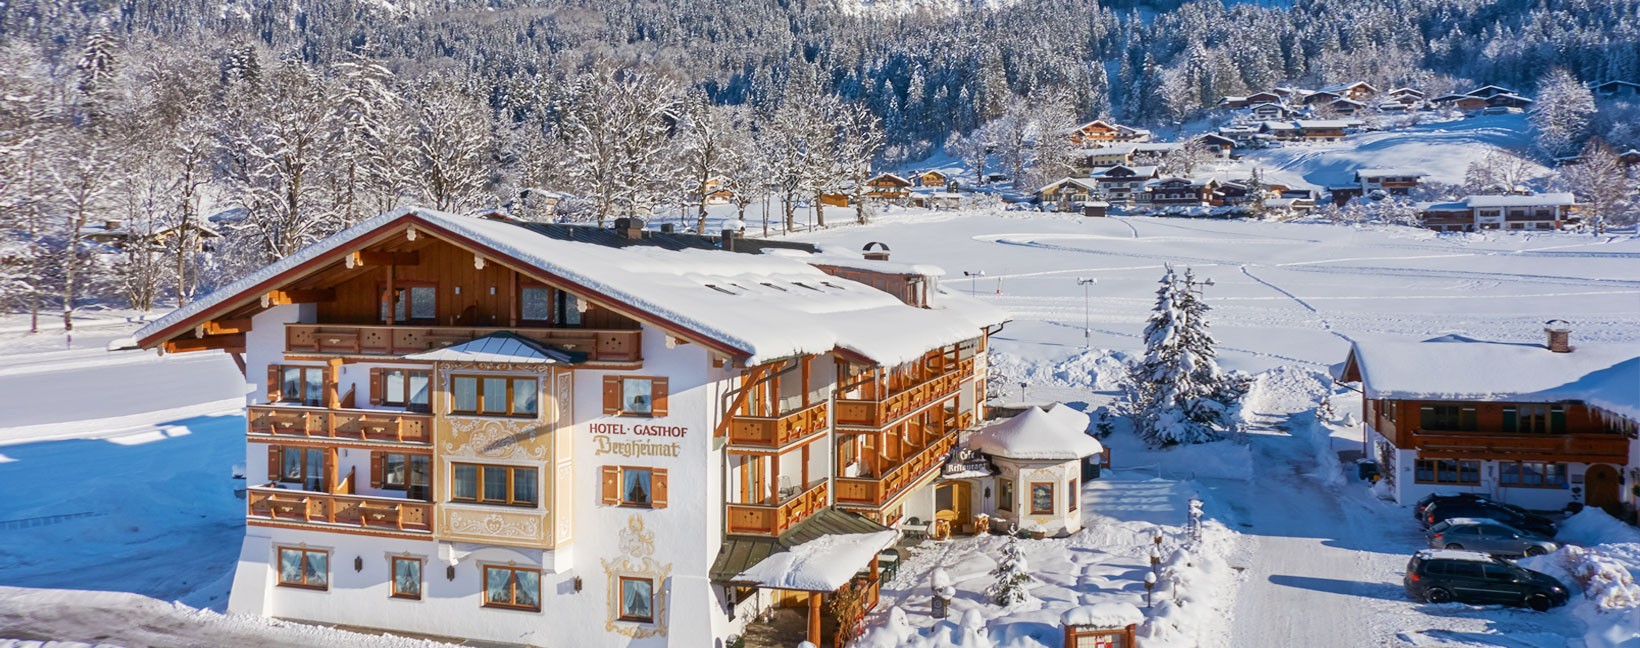 Hotel-Gasthof Bergheimat im Winter